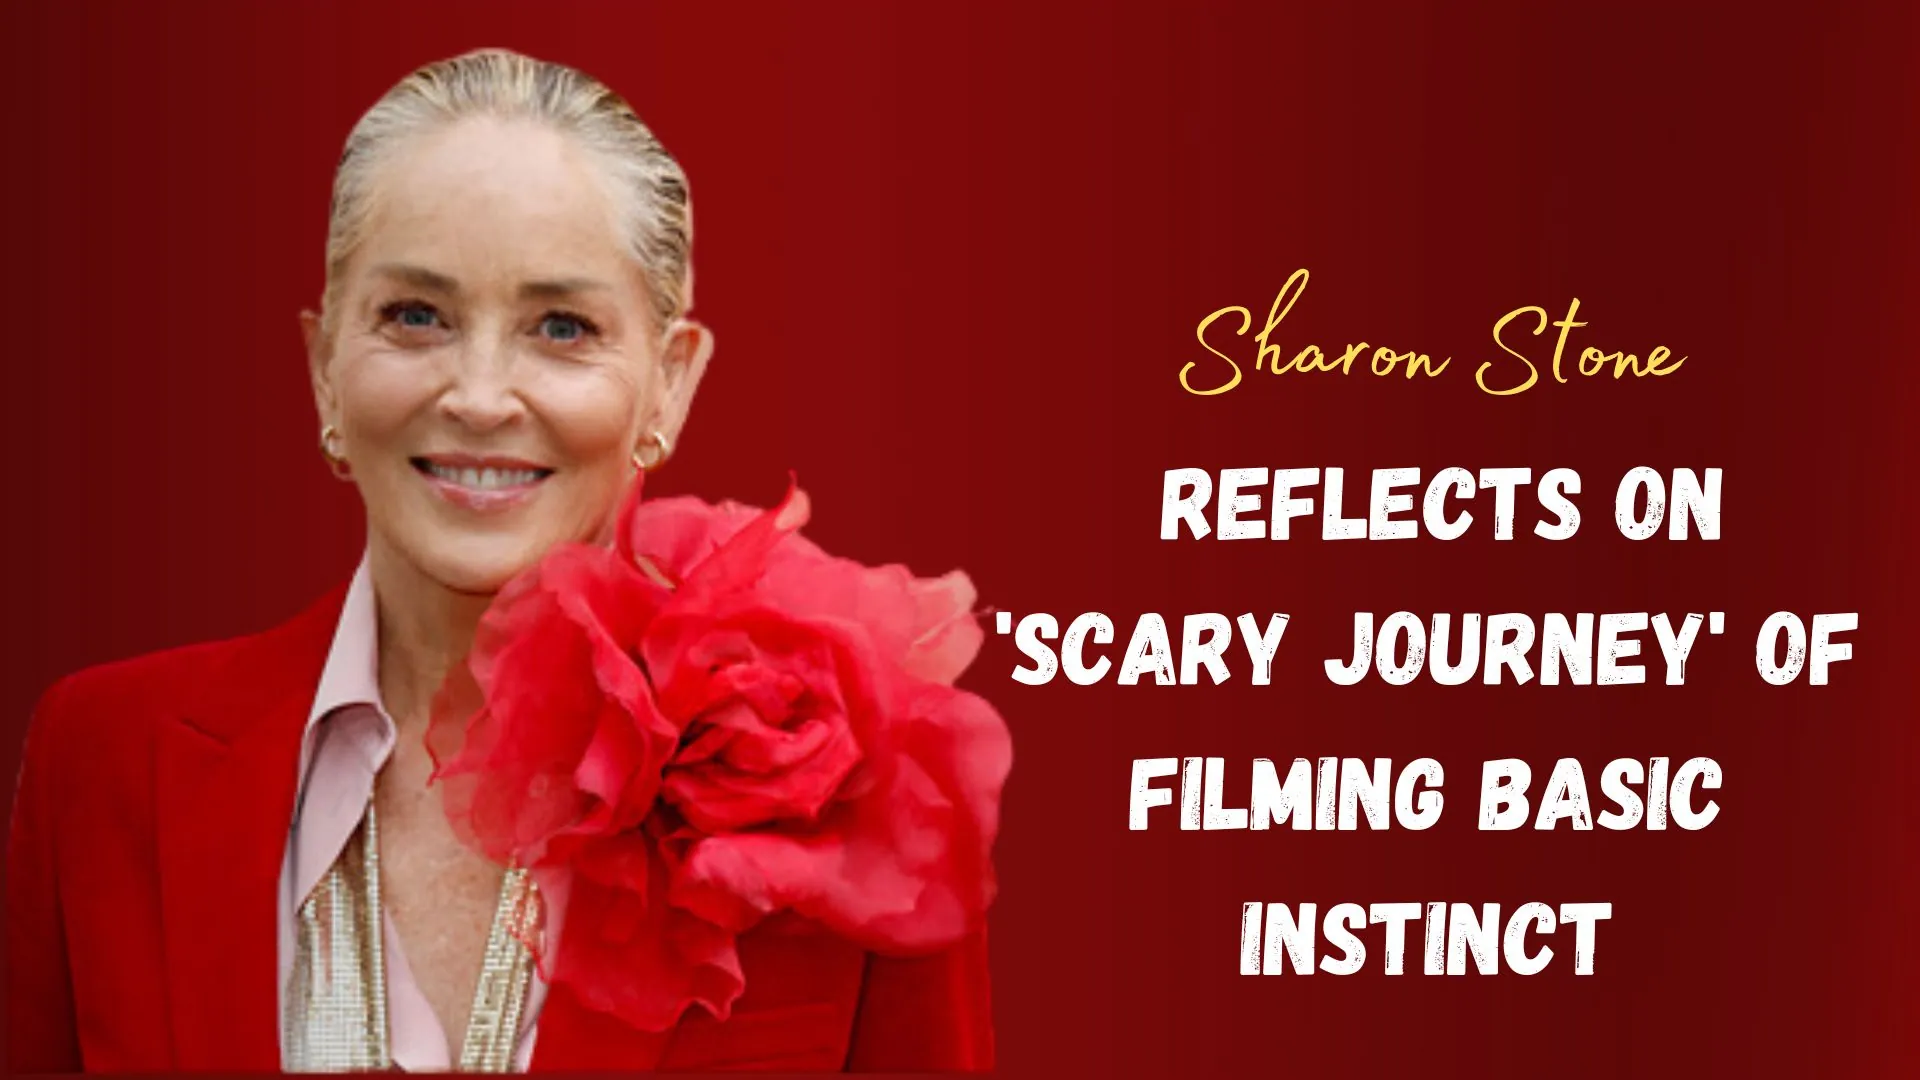 Sharon Stone Reflects on 'Scary Journey' of Filming Basic Instinct